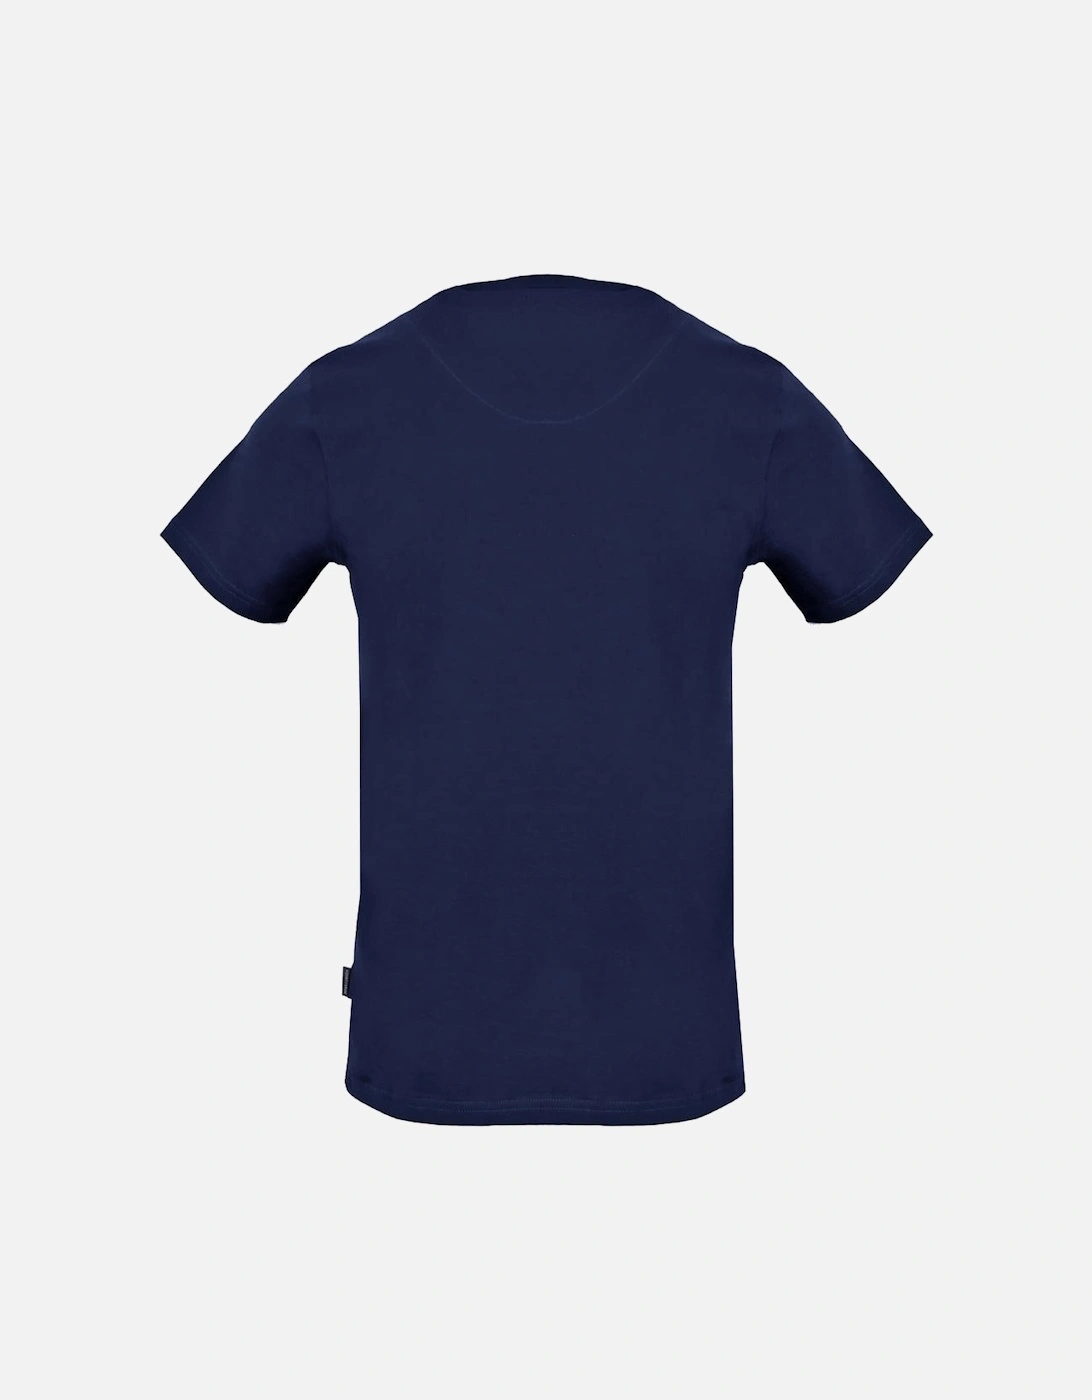 Triple A Logo Navy Blue T-Shirt